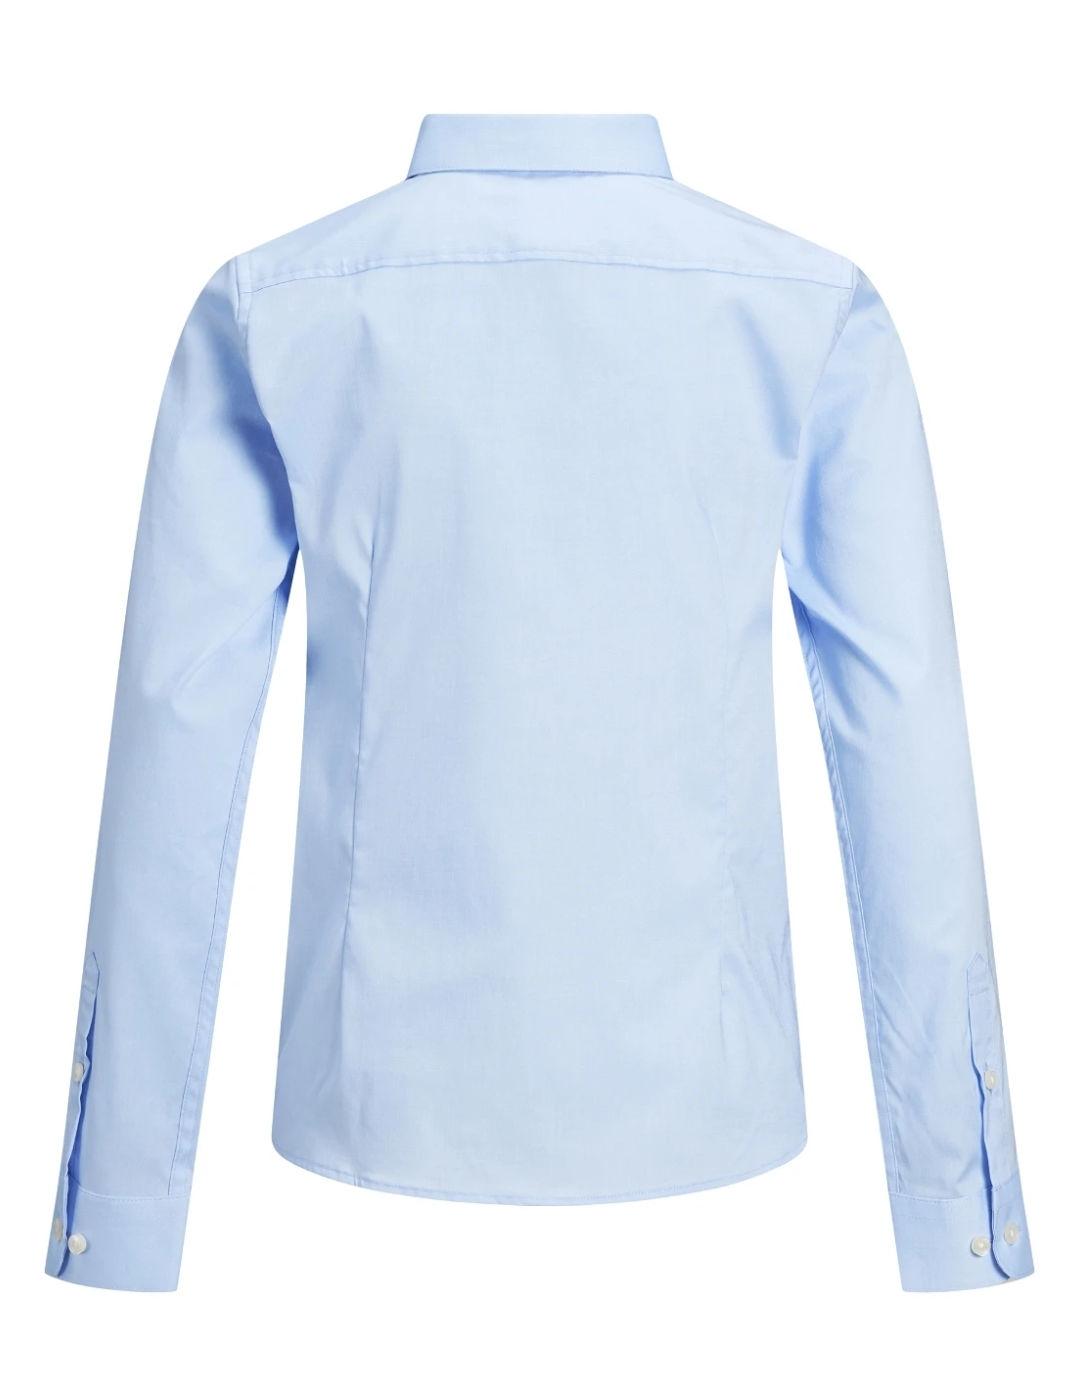 Camisa Jack&Jones Junior Parma azul celeste para niño